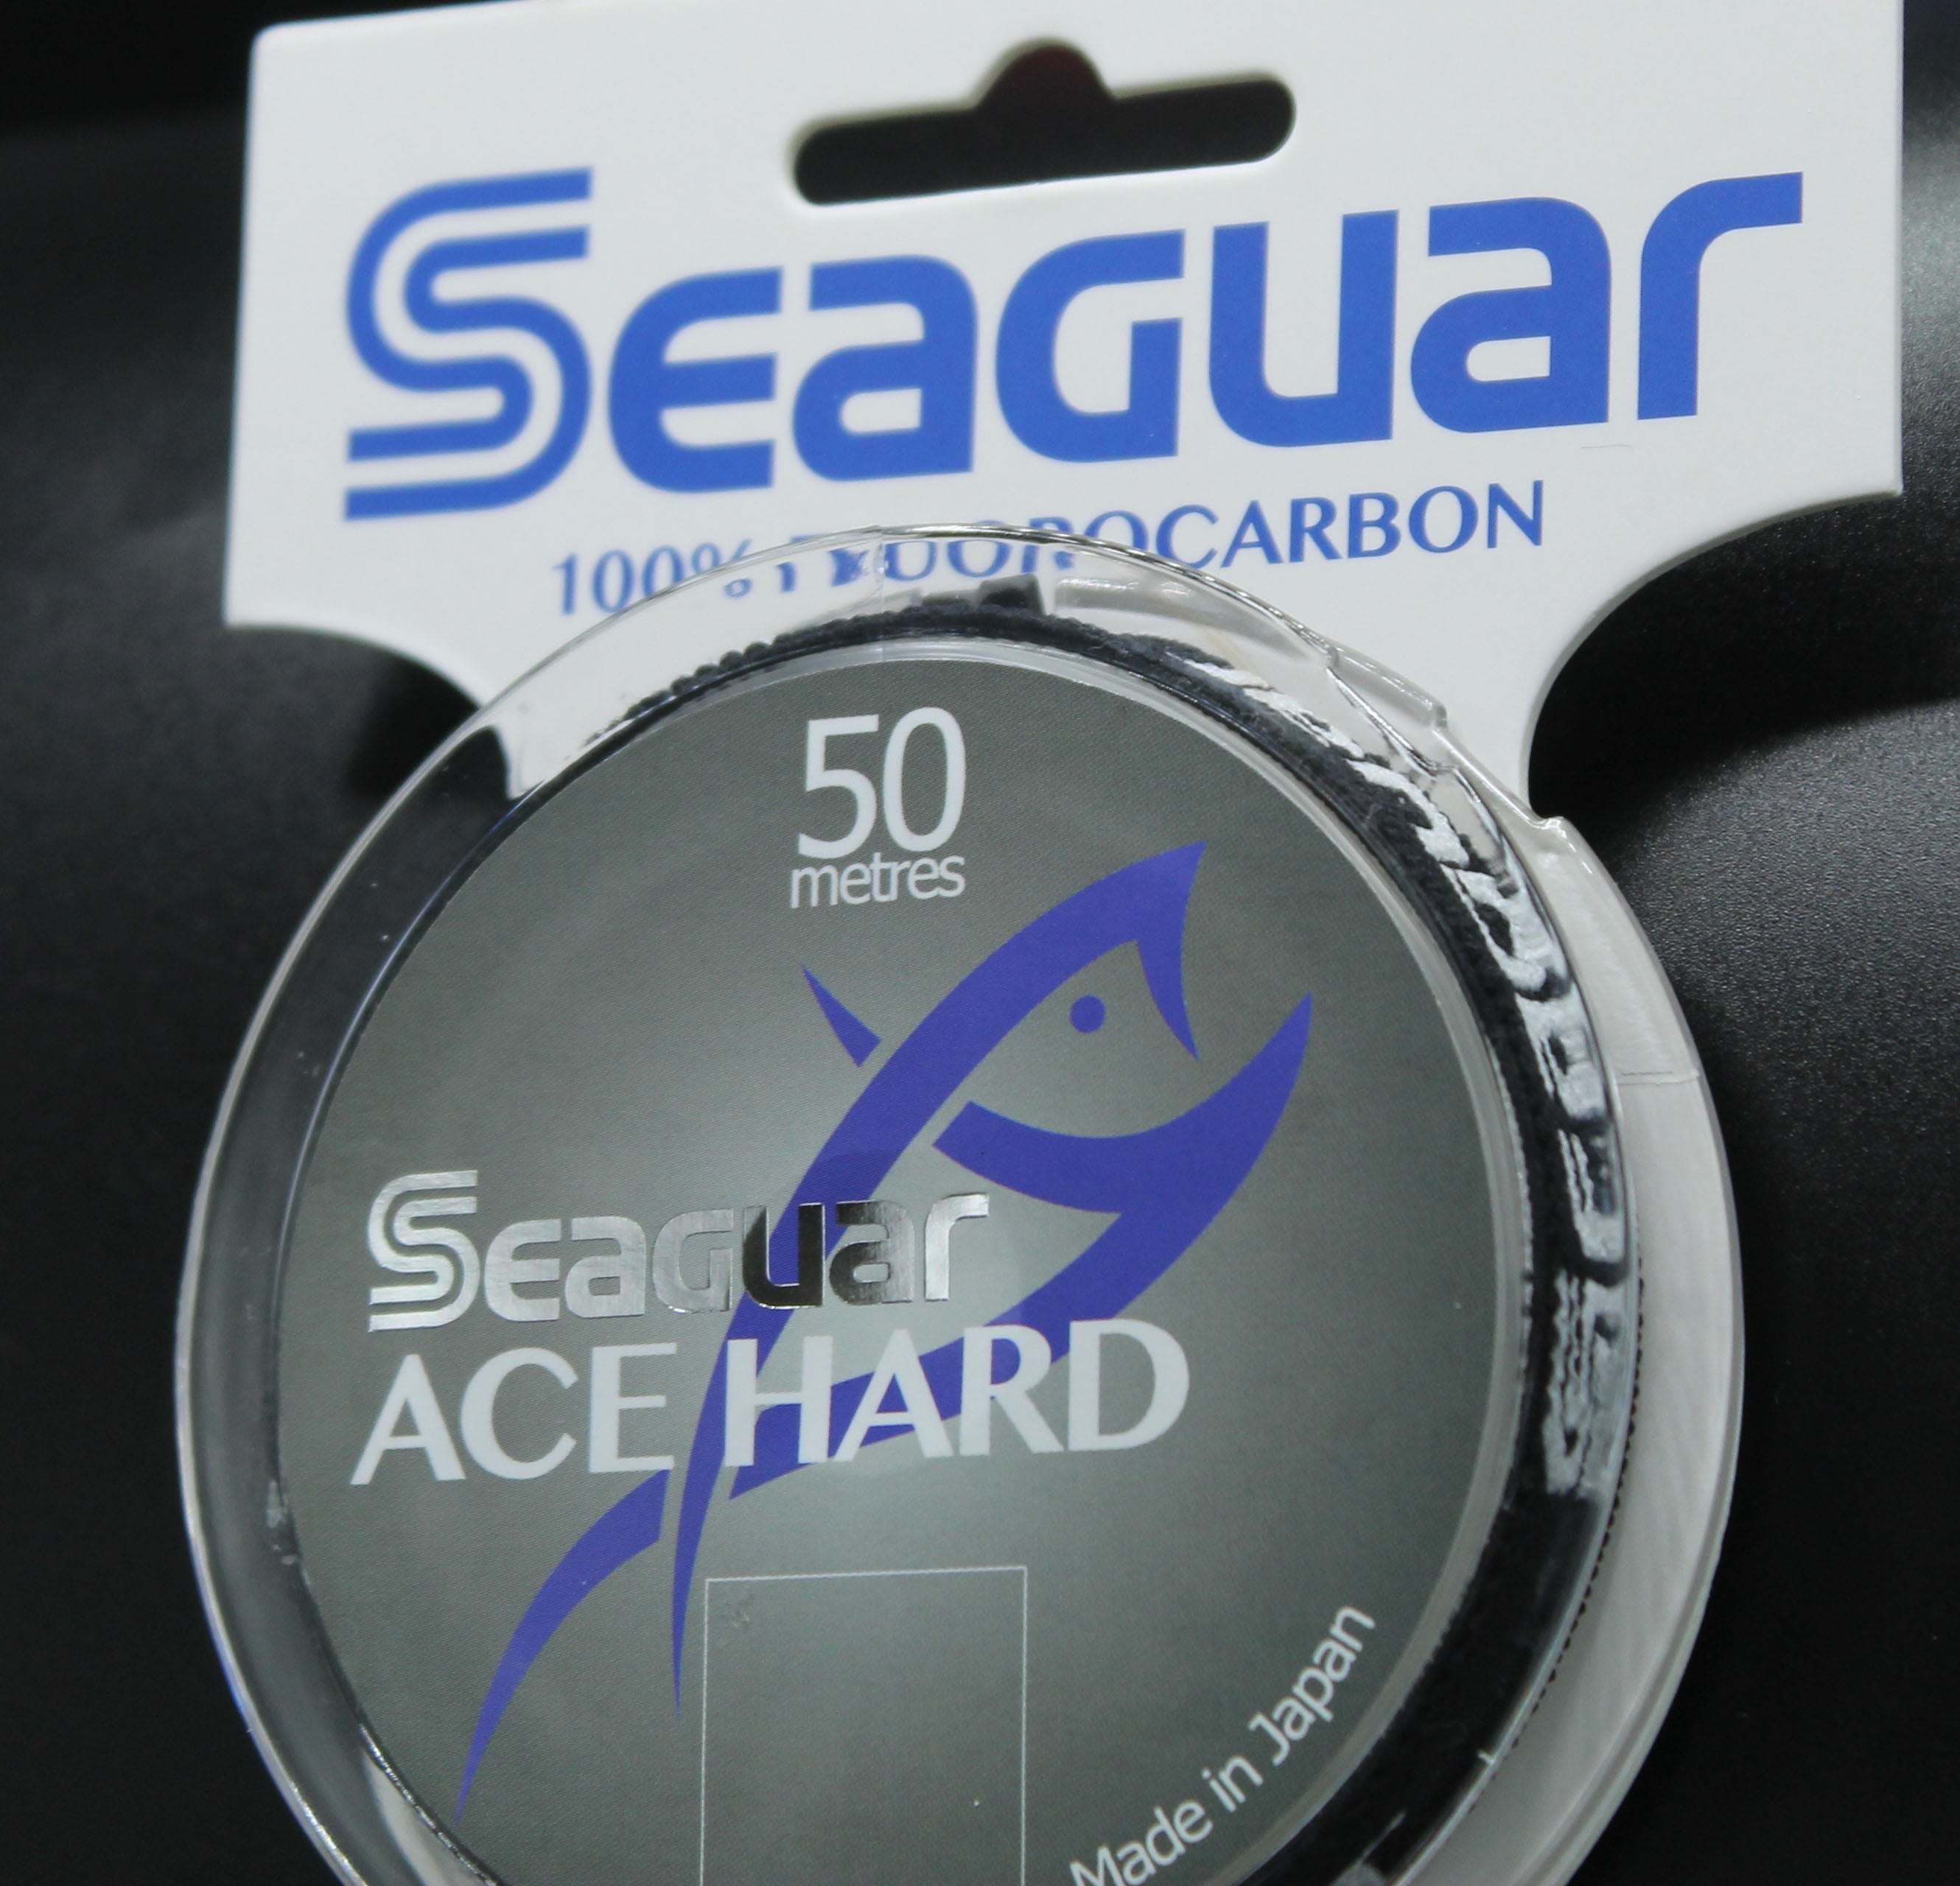 Seaguar Ace Hard Fluorocarbon Fishing Line 50m Spools